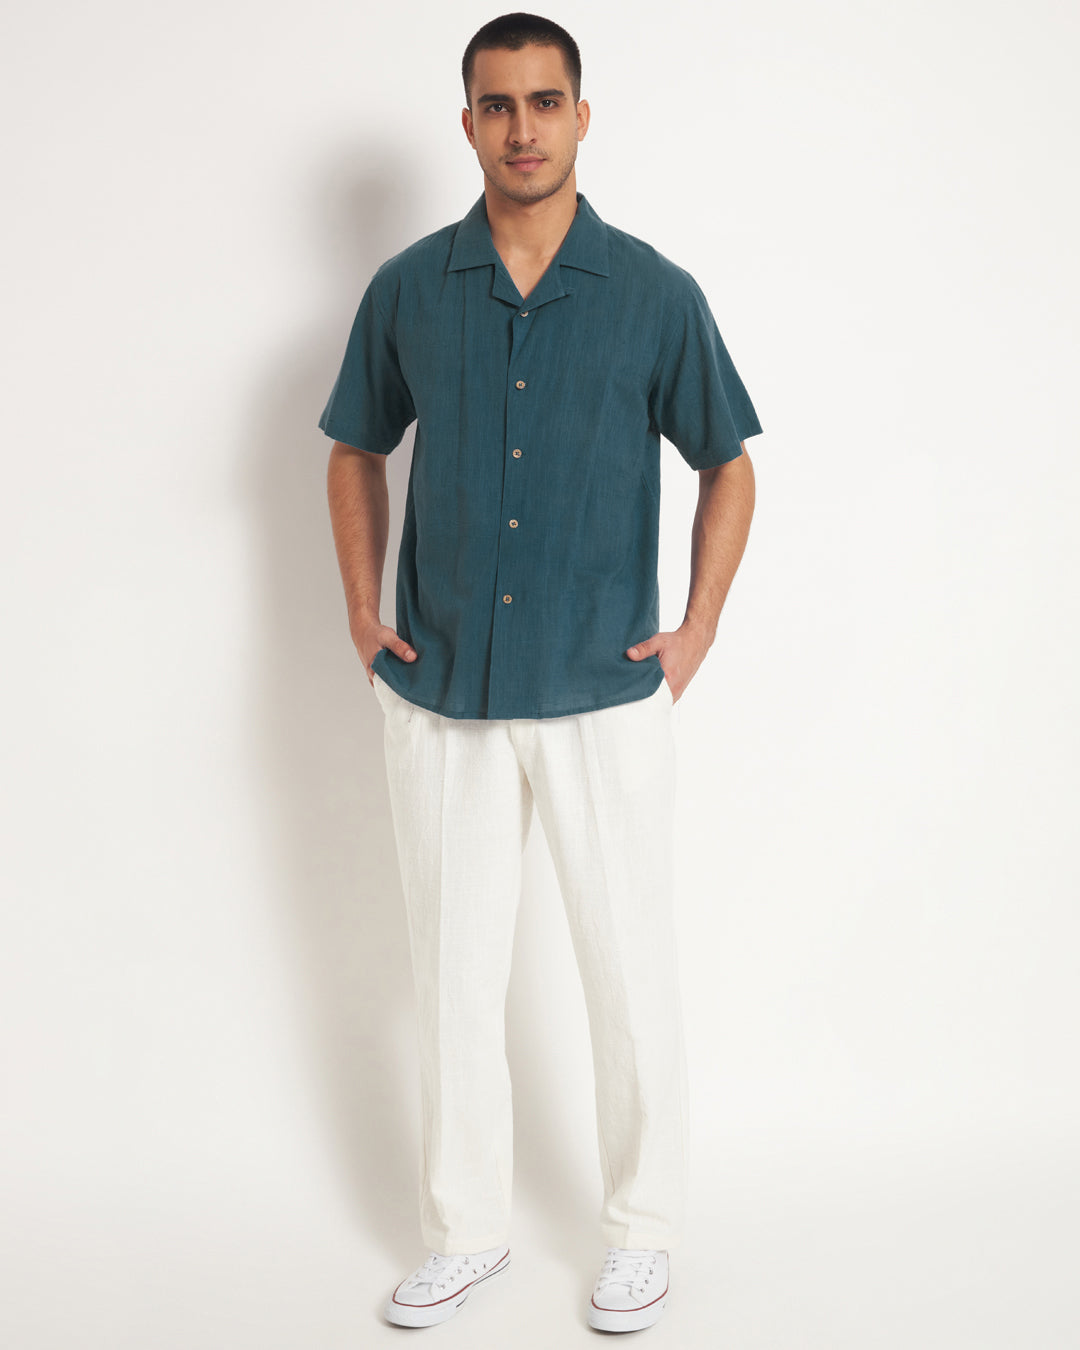 Combo: Classic Deep Teal Half Sleeves Men's Shirt & Pants